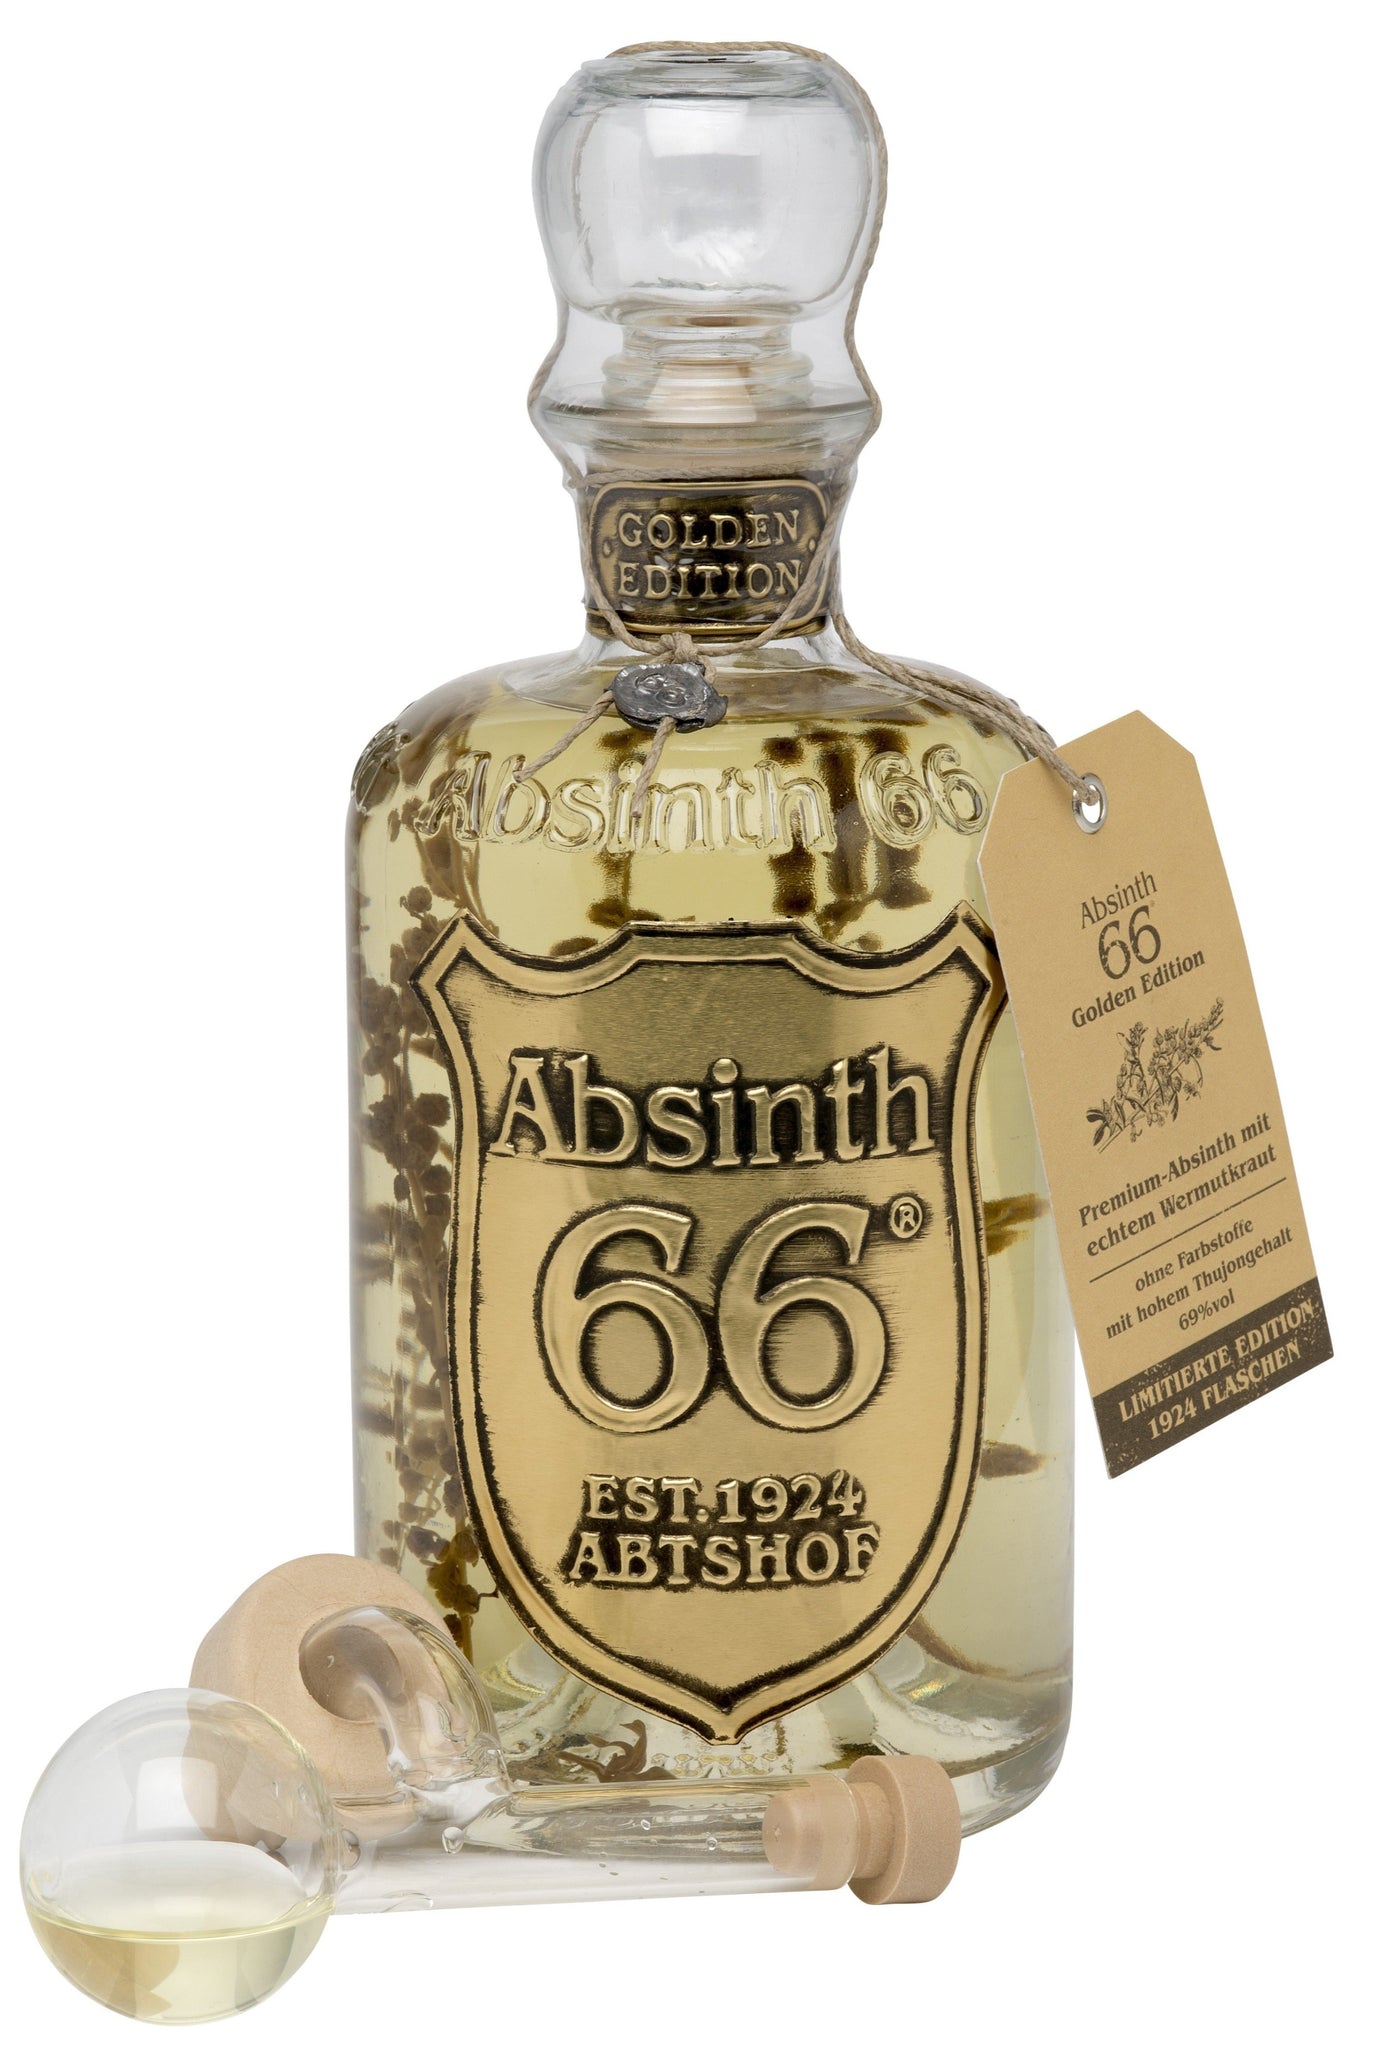 Absinthe 66® "Golden Edition" - 0.5 L / 69% vol.